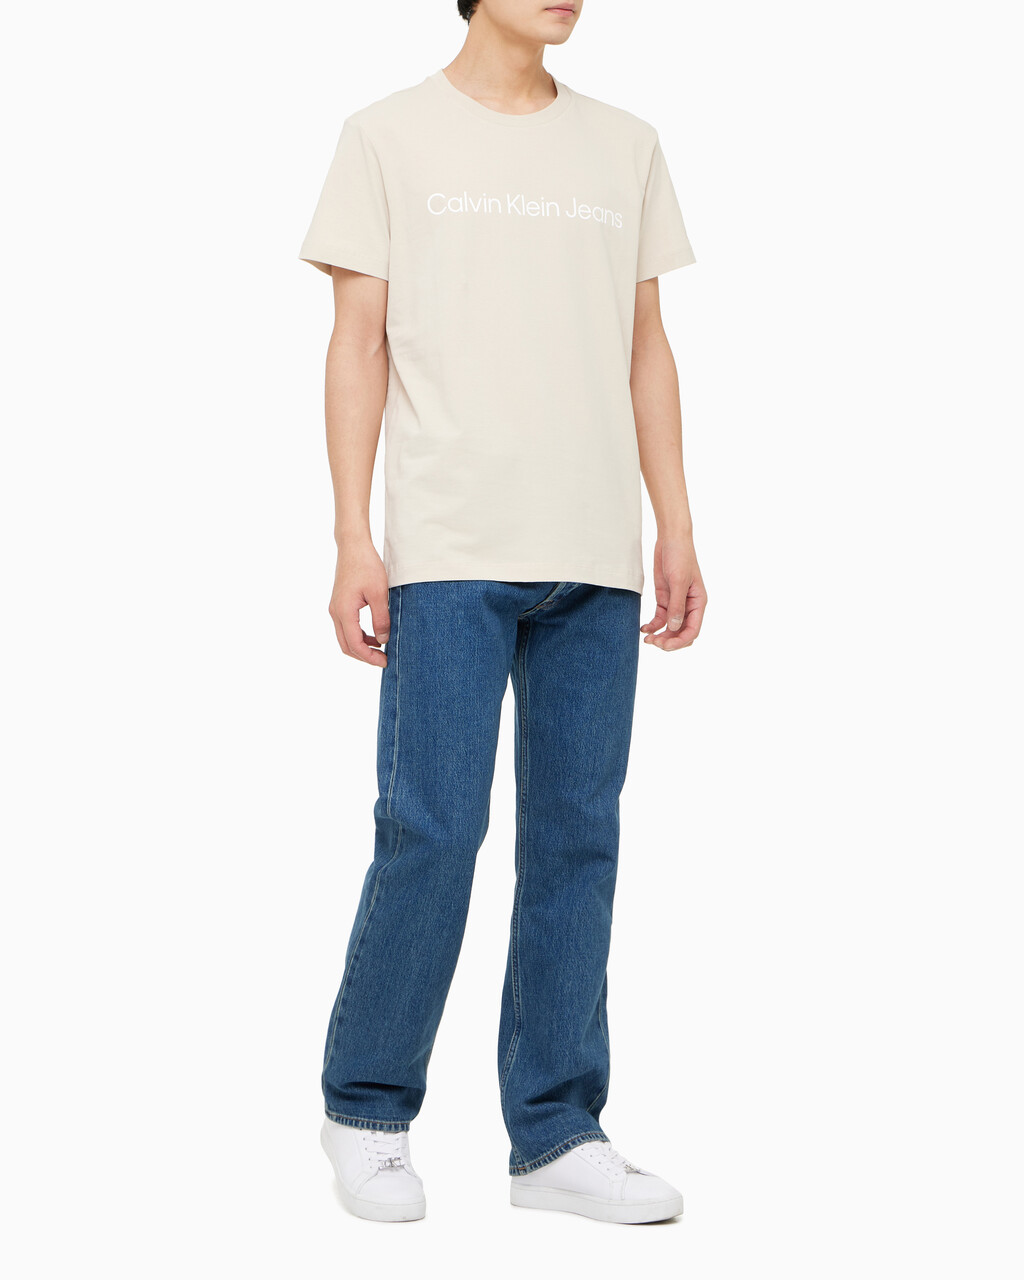 Buy 남성 레귤러핏 인스티튜셔널 로고 스트레치 반팔 티셔츠 in color CLASSIC BEIGE